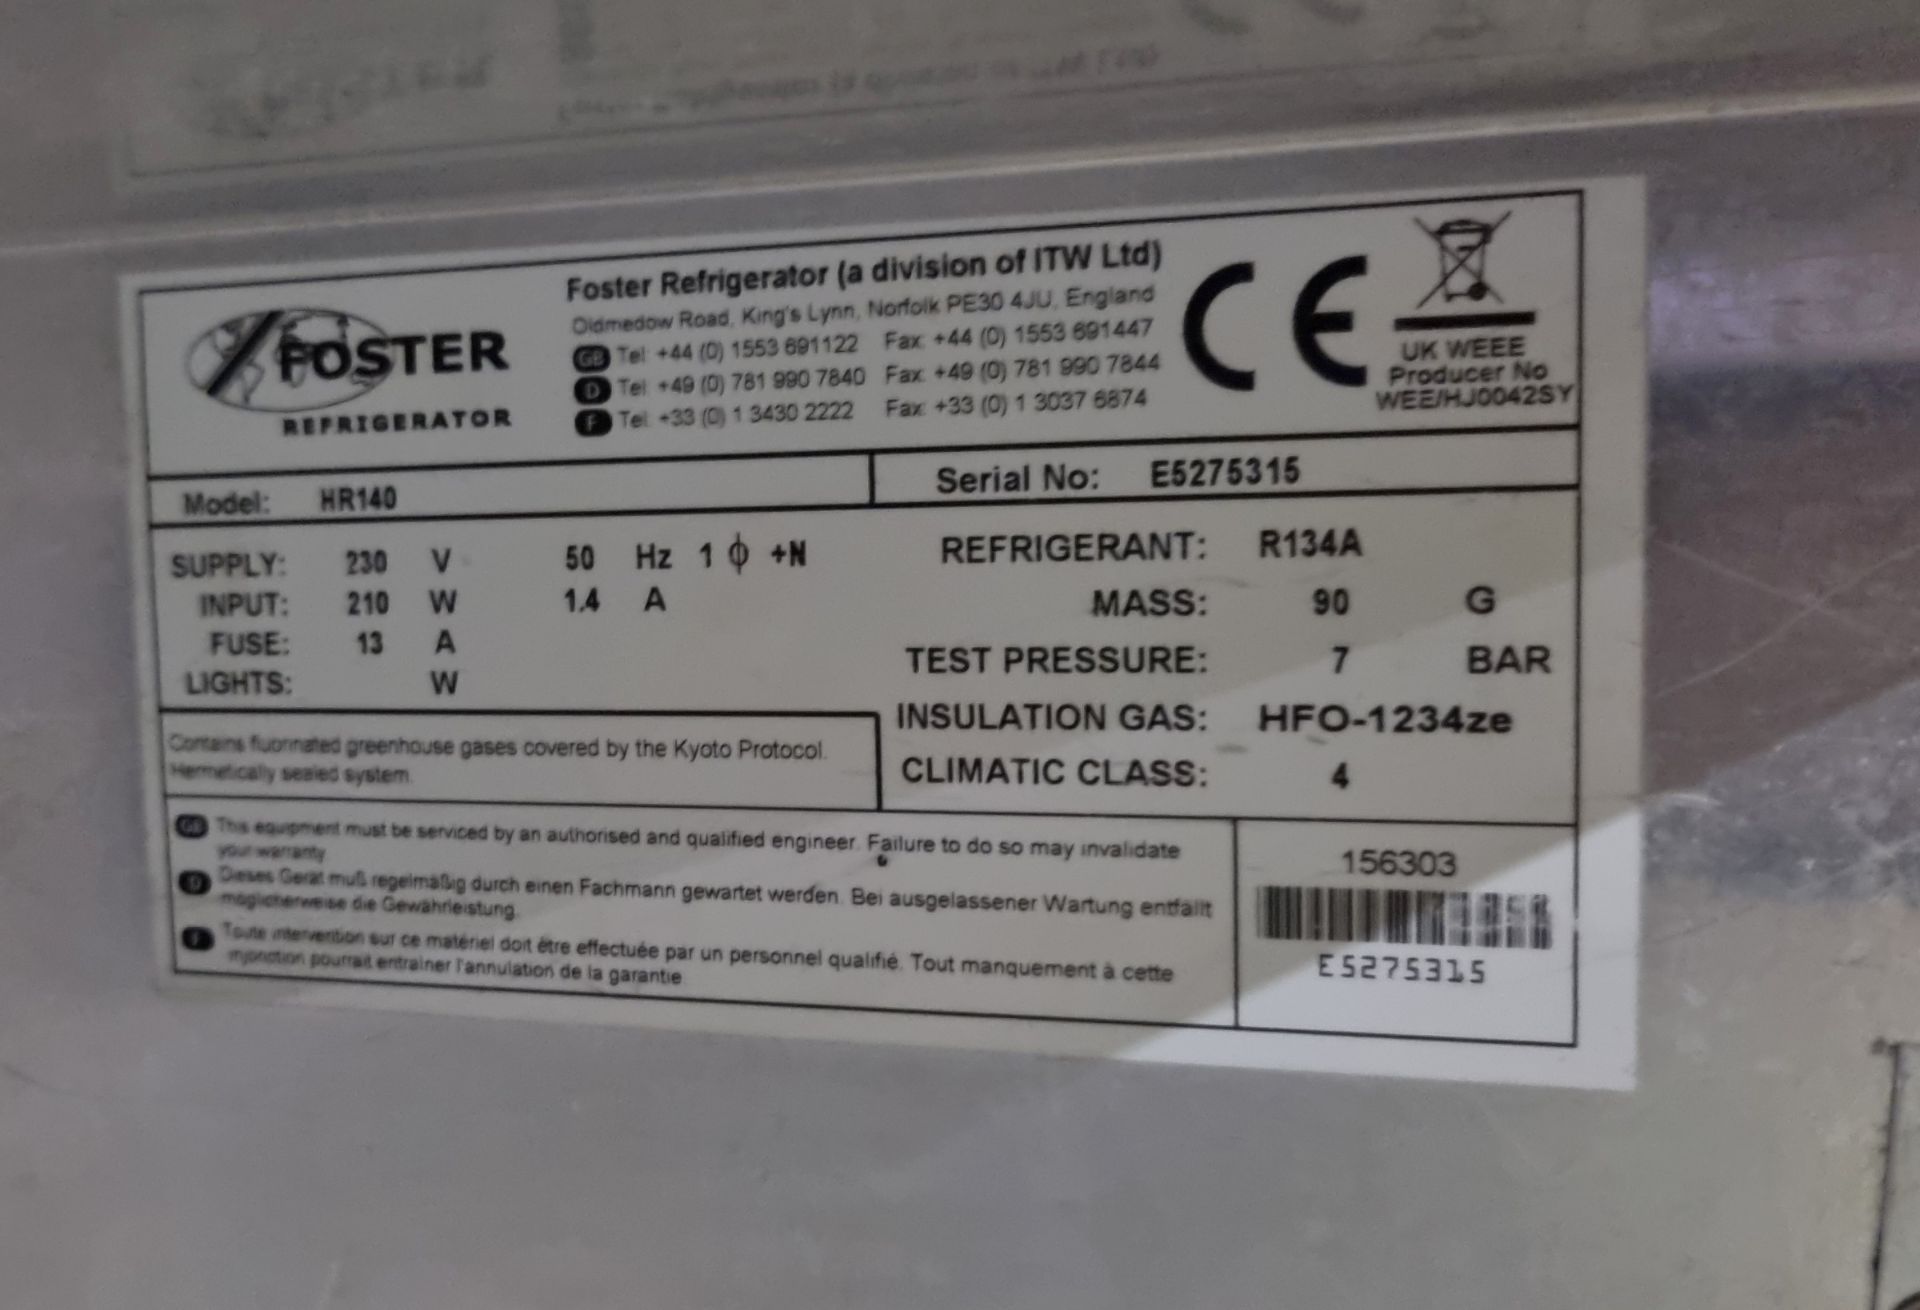 Foster HR140 stainless steel single door under counter fridge - W 605 x D 615 x H 830mm - Image 4 of 6